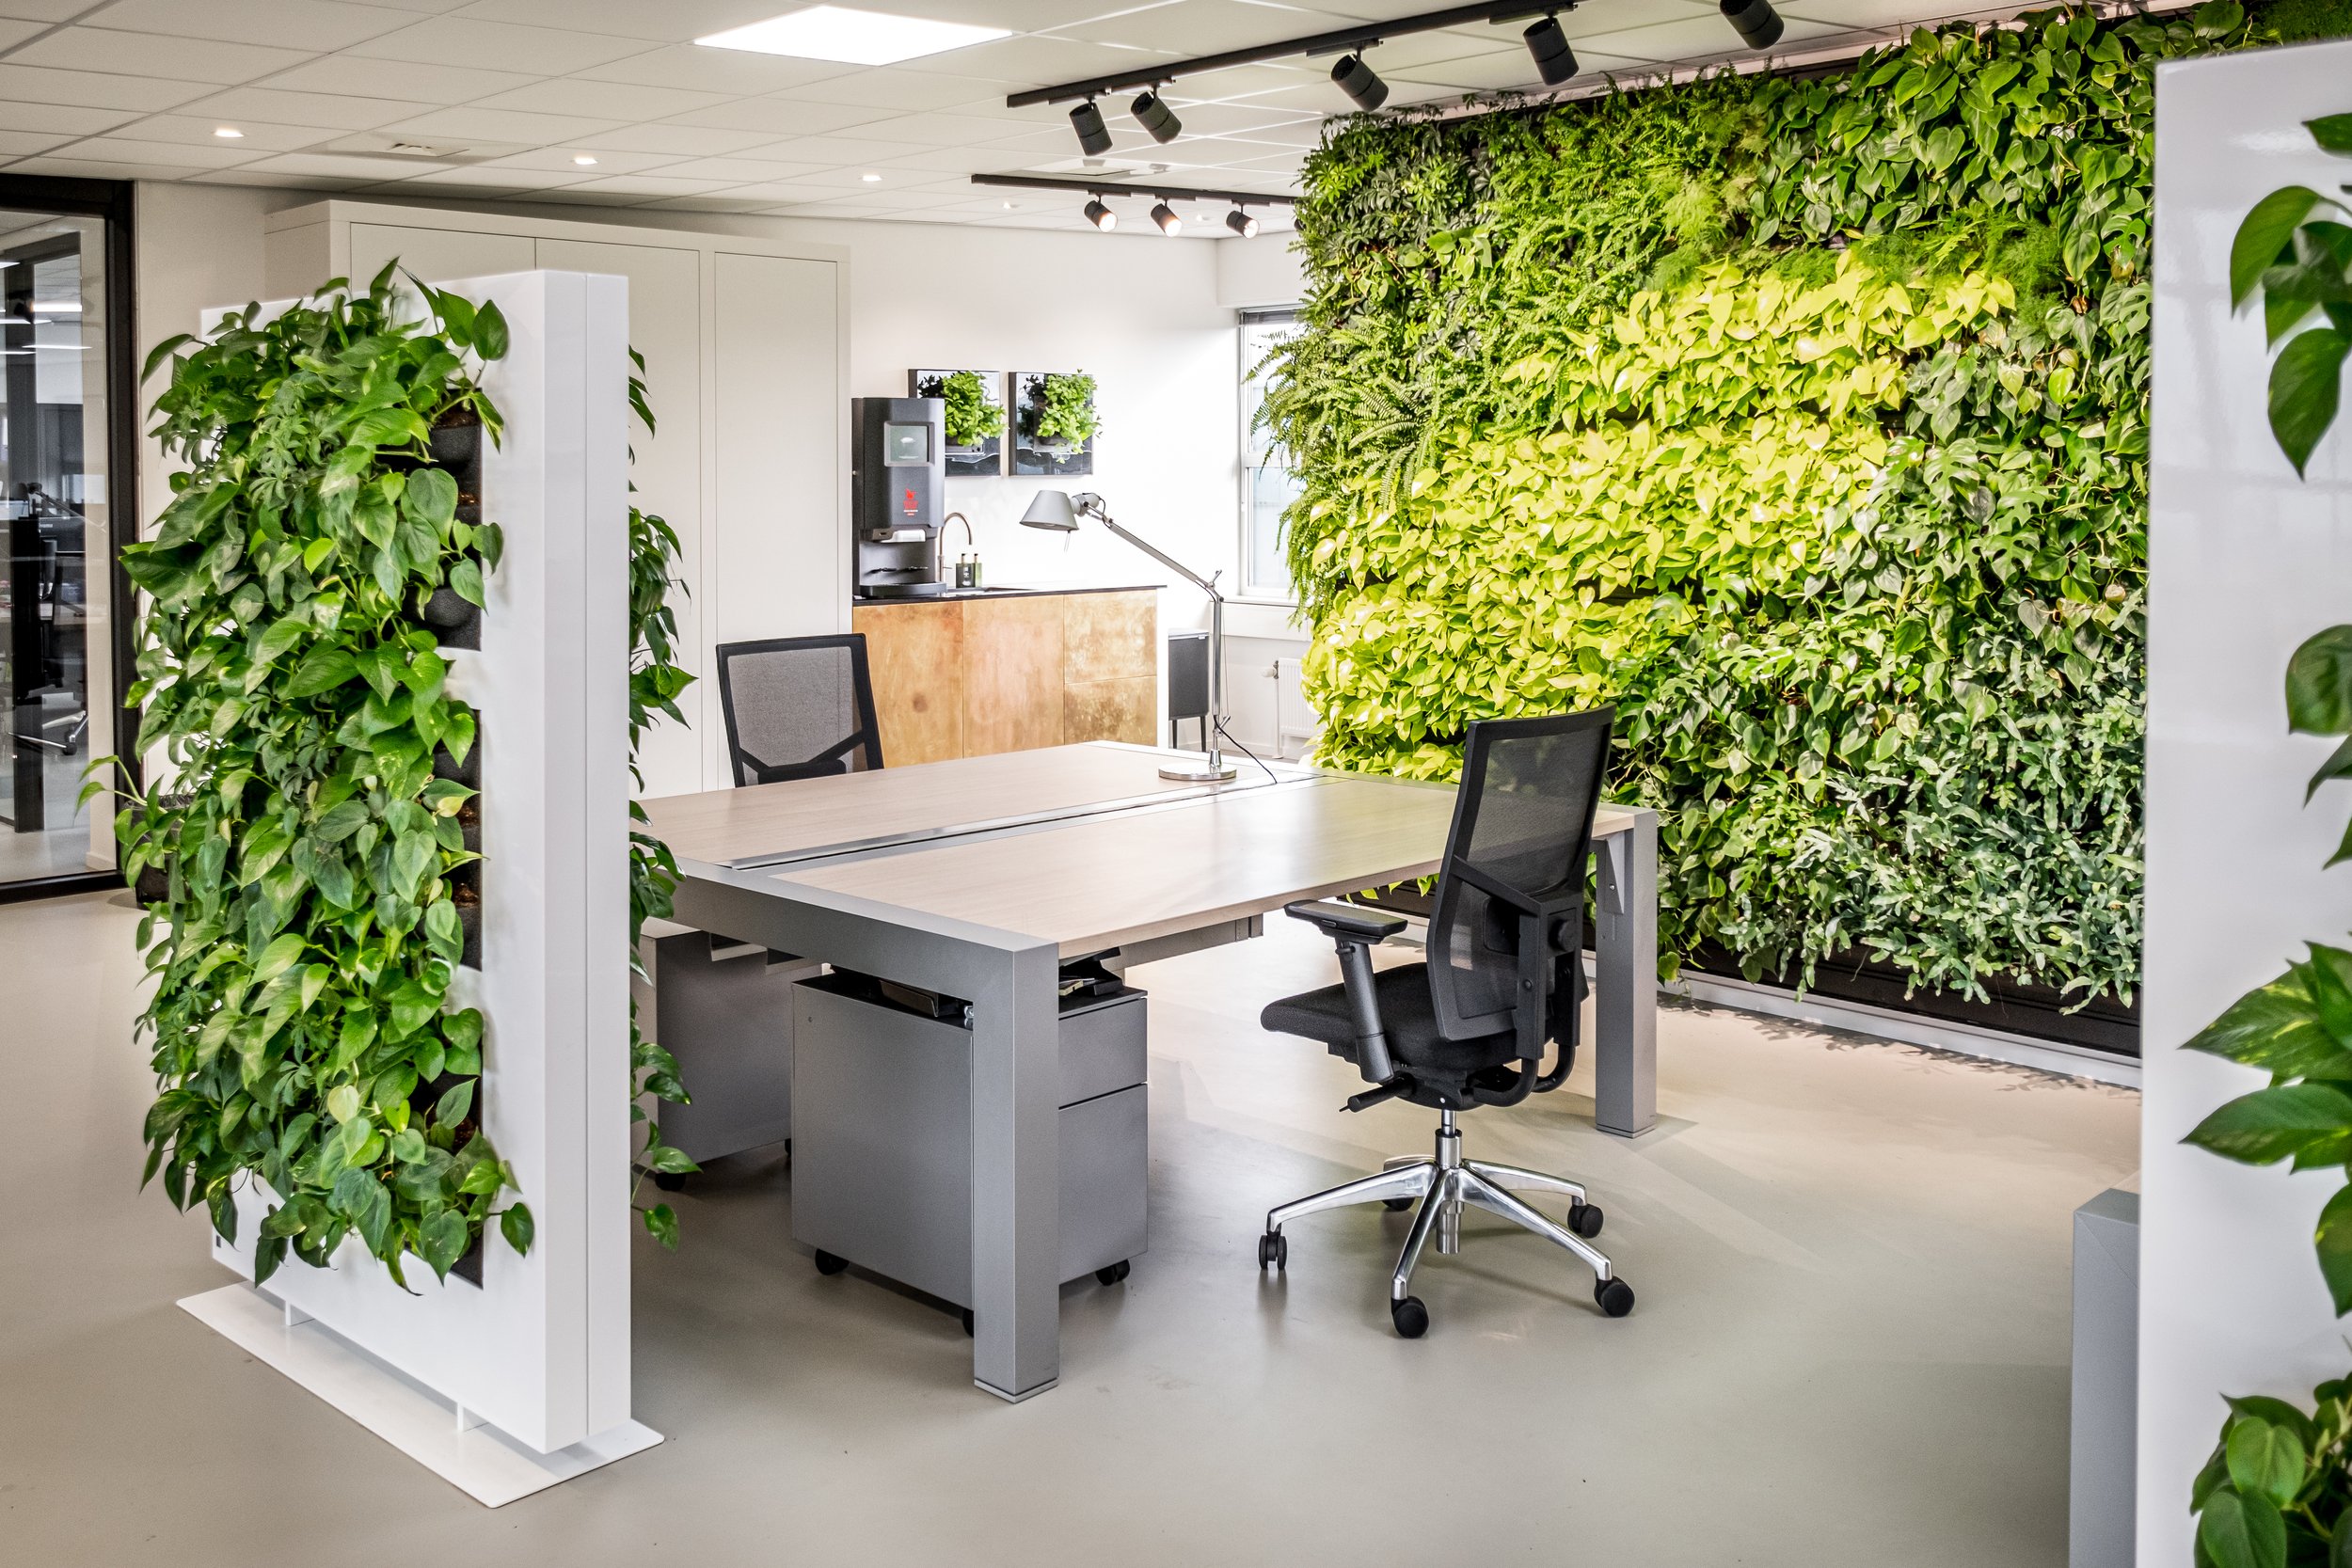 41 Green office ideas | green office, office design, office interiors